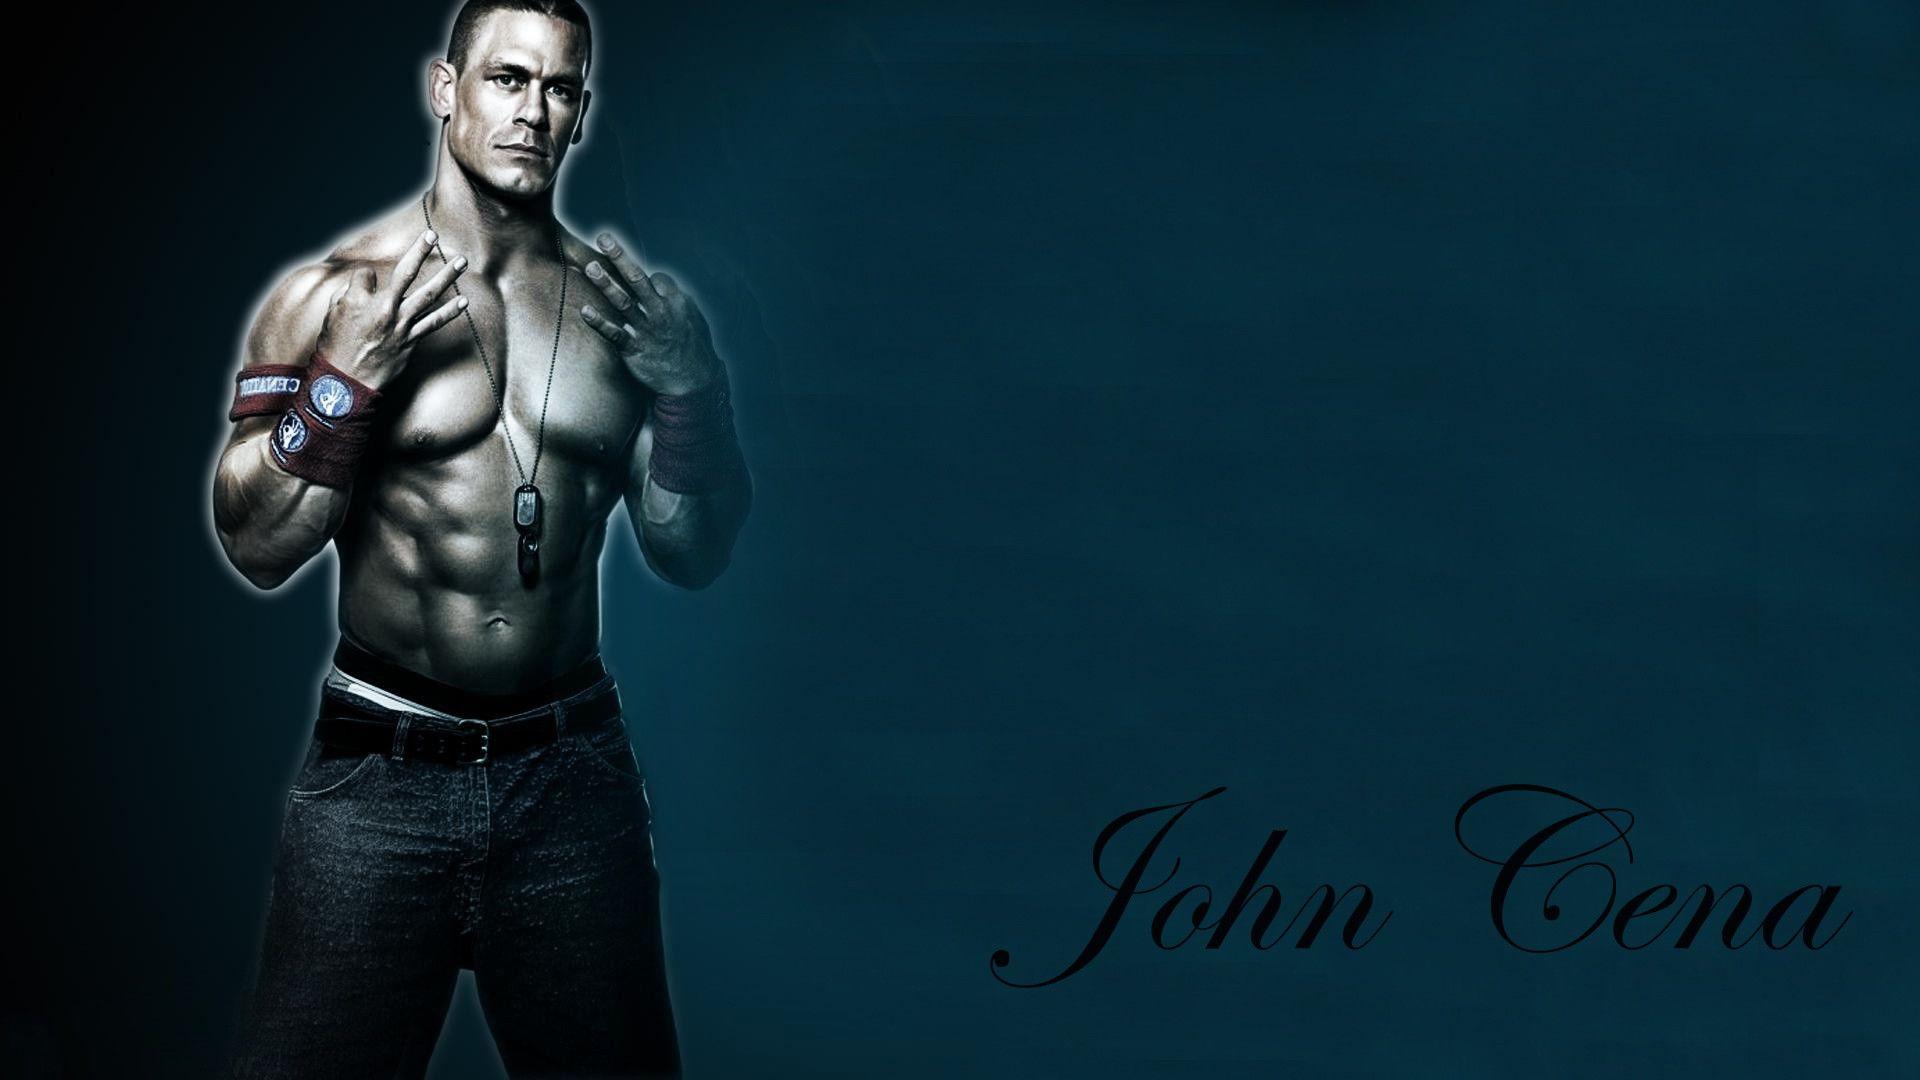 John Cena Wallpaper HD. Wallpaper, Background, Image, Art Photo